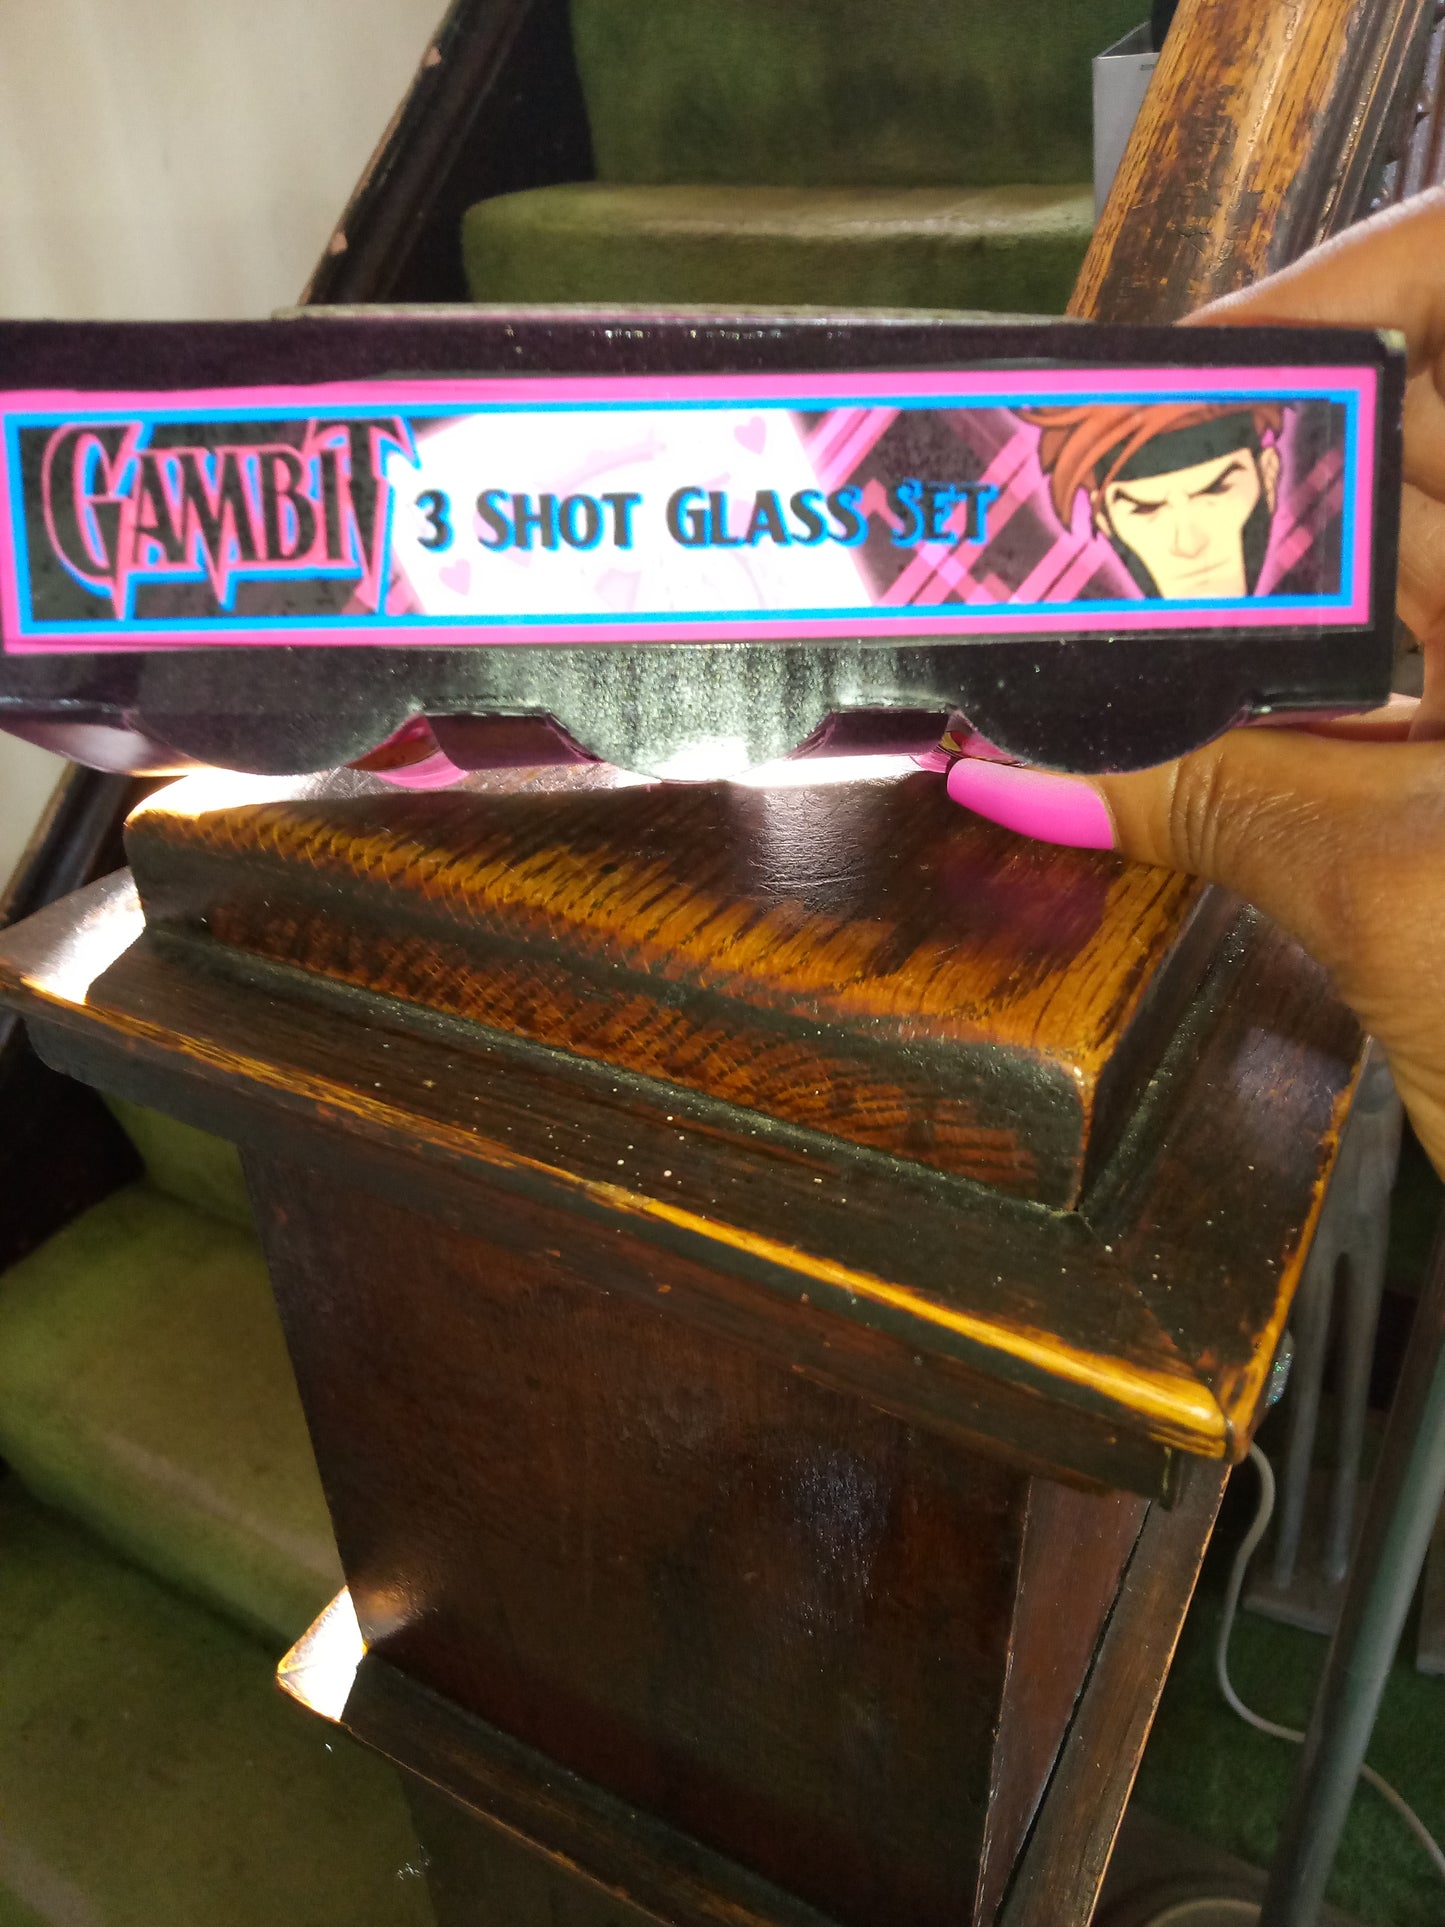 X-Men 97 Gambit inspired Shot Glass Set